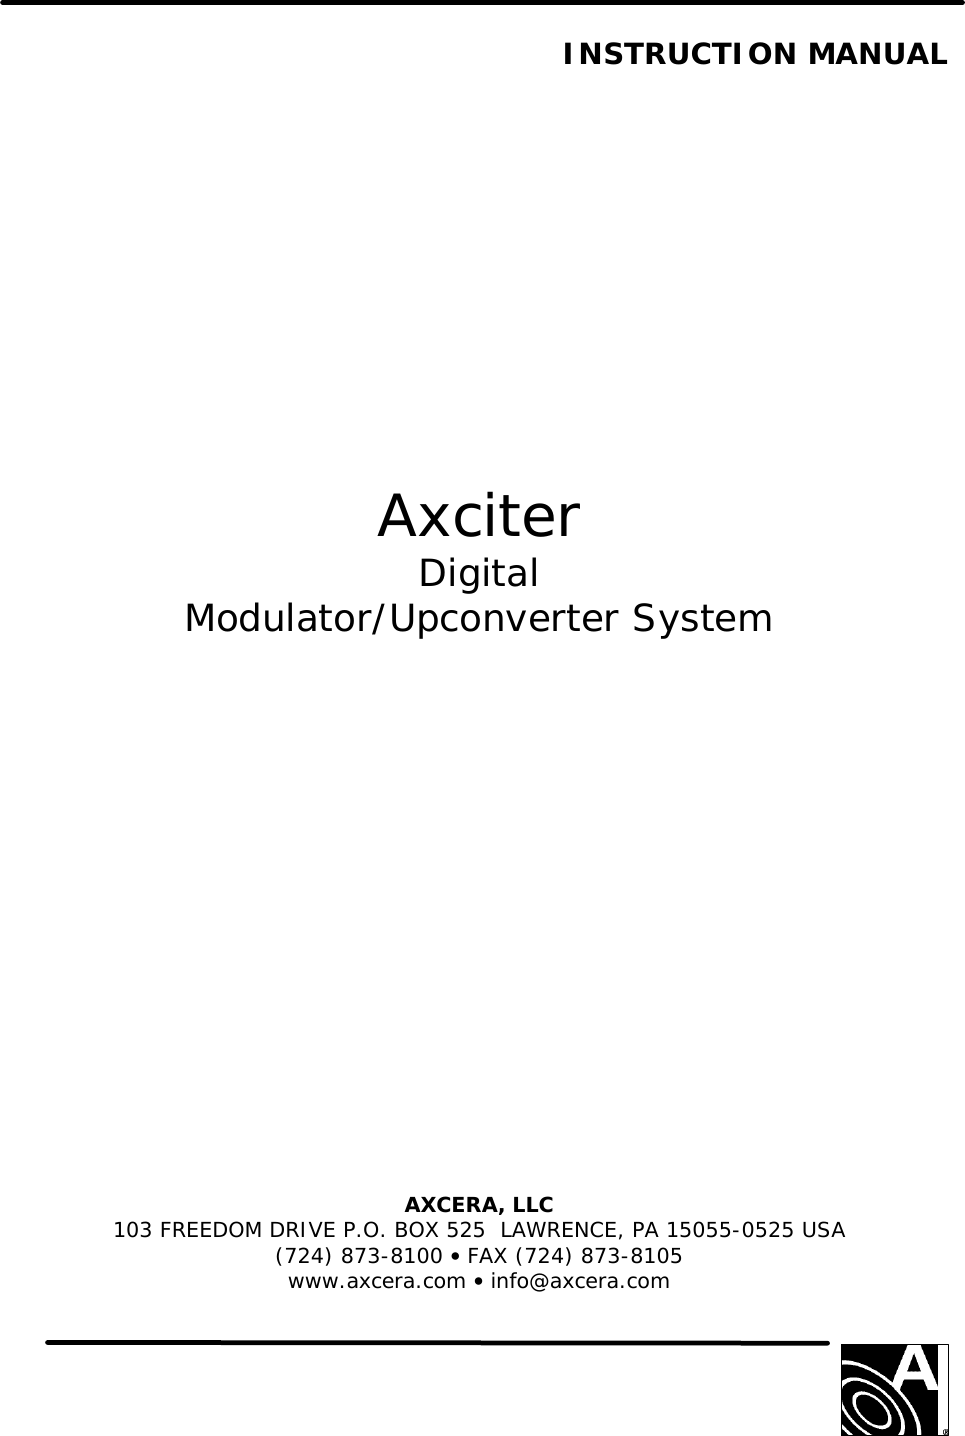   INSTRUCTION MANUAL                  Axciter Digital Modulator/Upconverter System                 AXCERA, LLC  103 FREEDOM DRIVE P.O. BOX 525  LAWRENCE, PA 15055-0525 USA (724) 873-8100 • FAX (724) 873-8105 www.axcera.com • info@axcera.com     